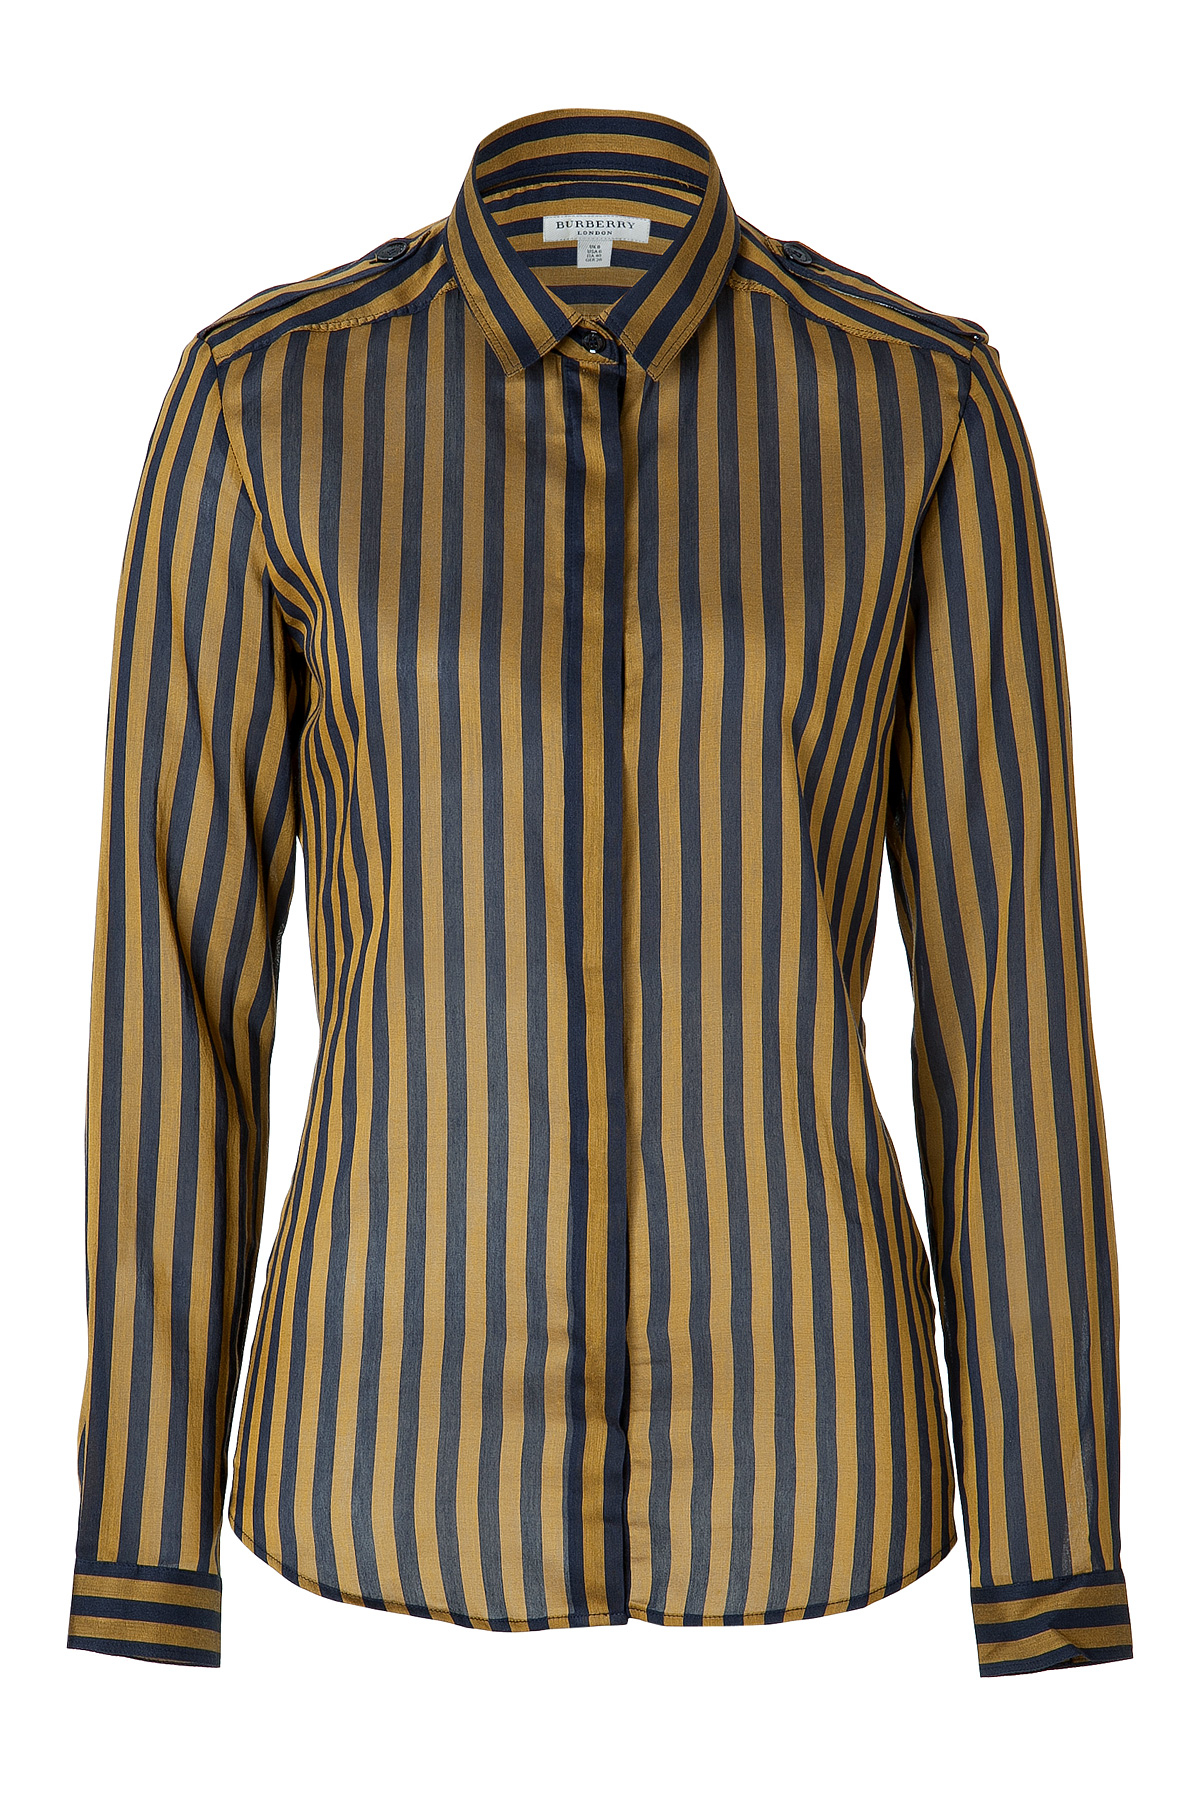 Lyst - Burberry Cotton Silk Striped Shirt in Tourmaline Yellow in Yellow